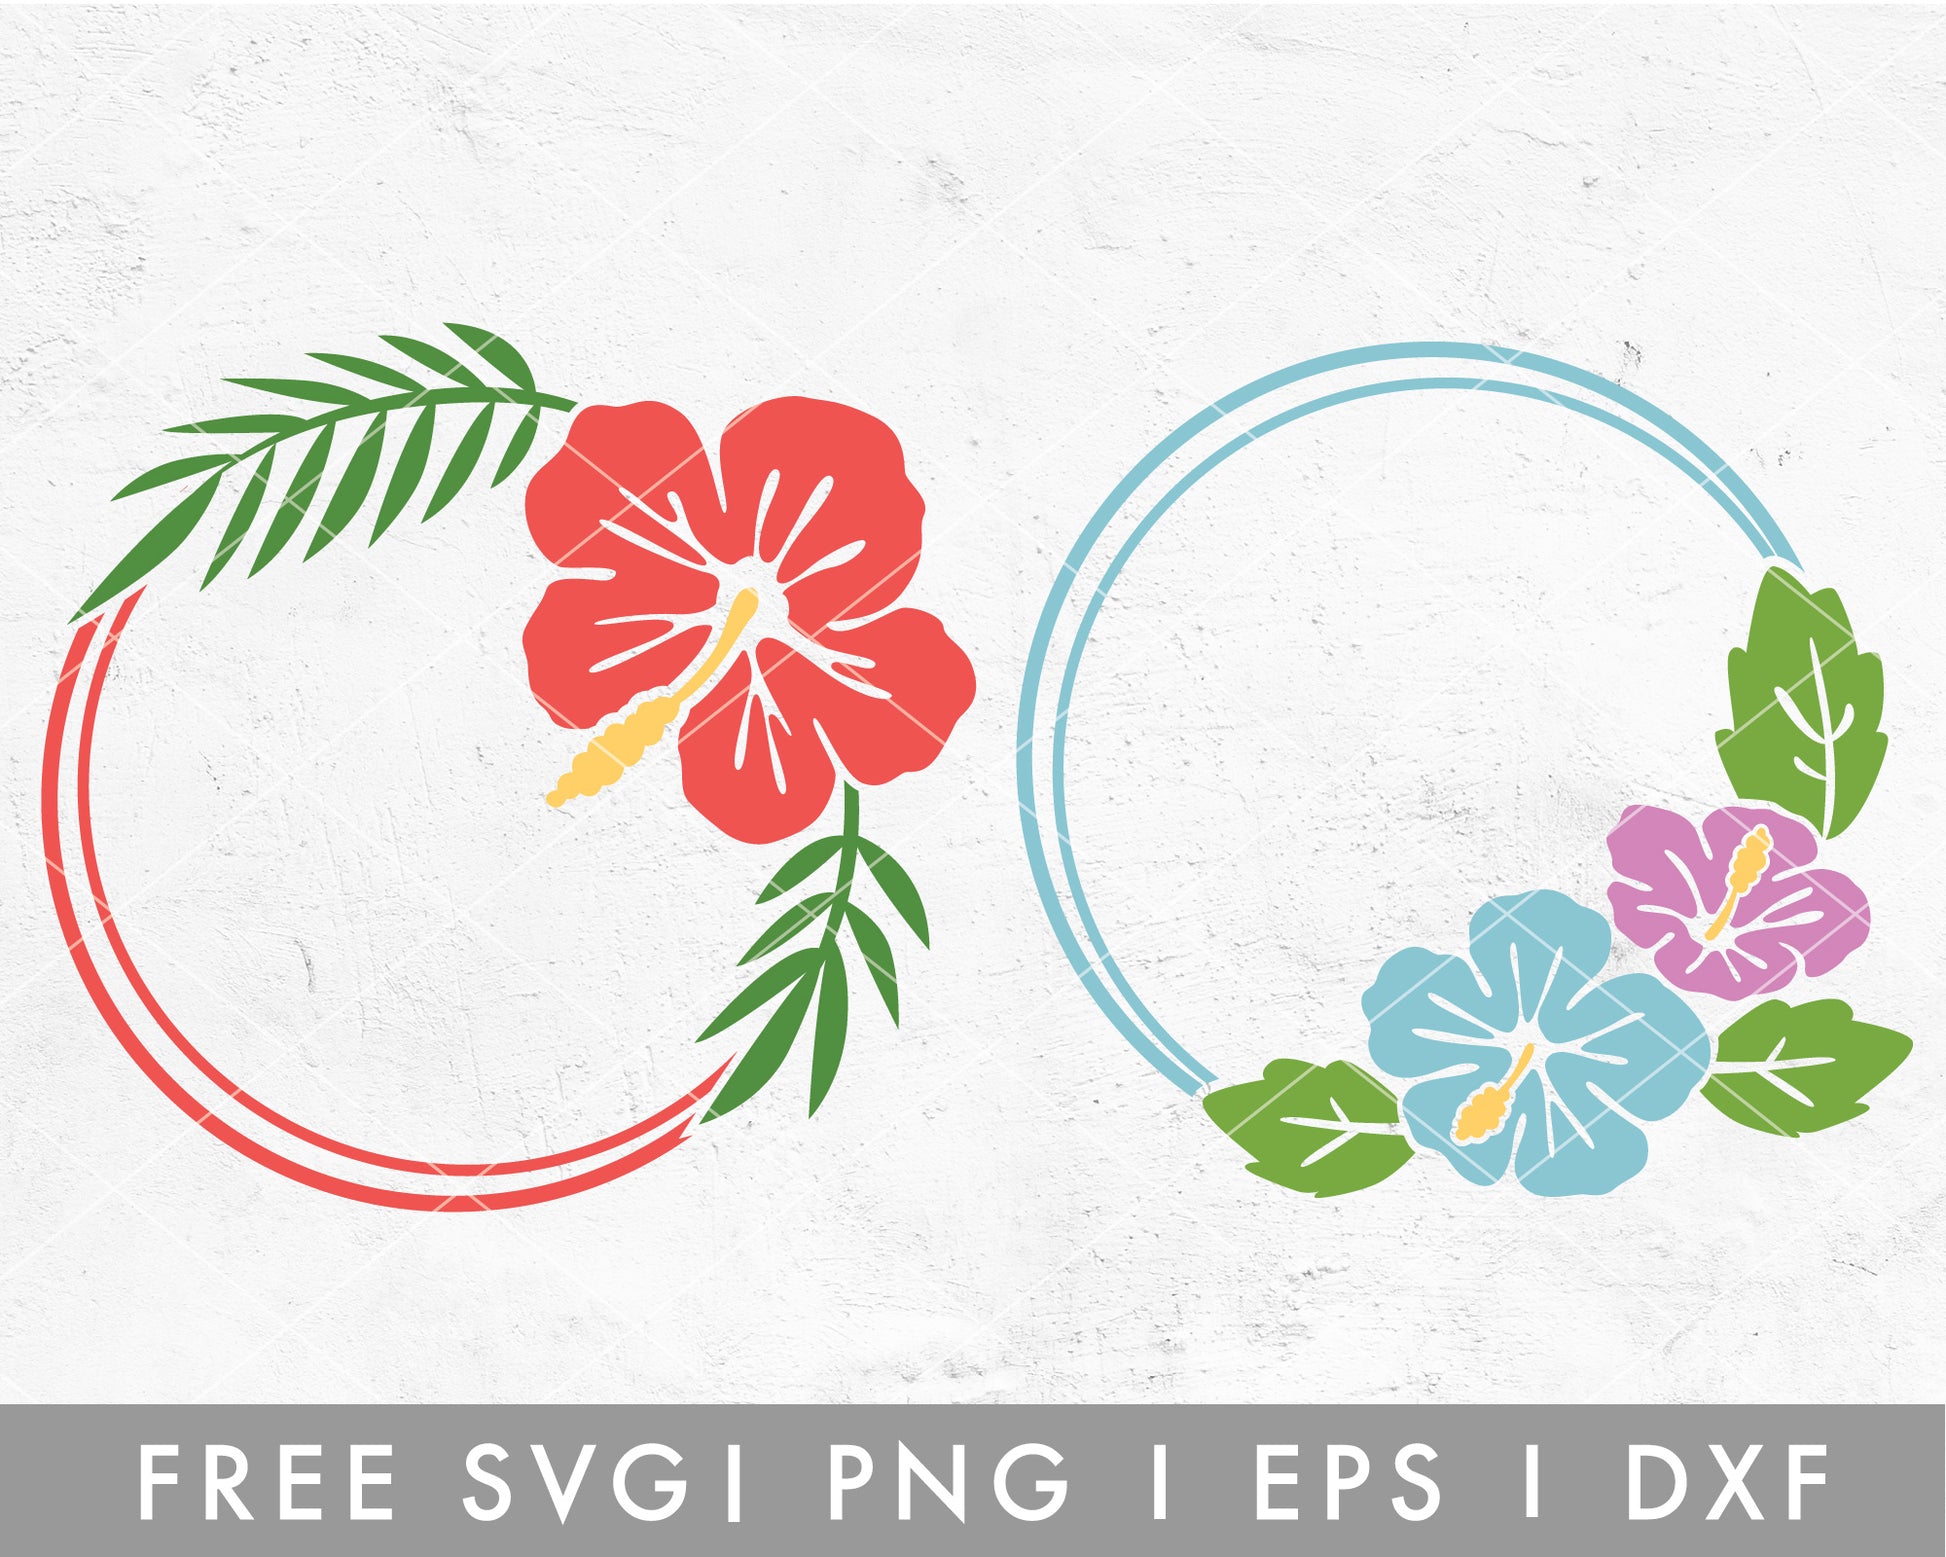 Free Flower Monogram SVG, PNG, EPS & DXF by Caluya Design